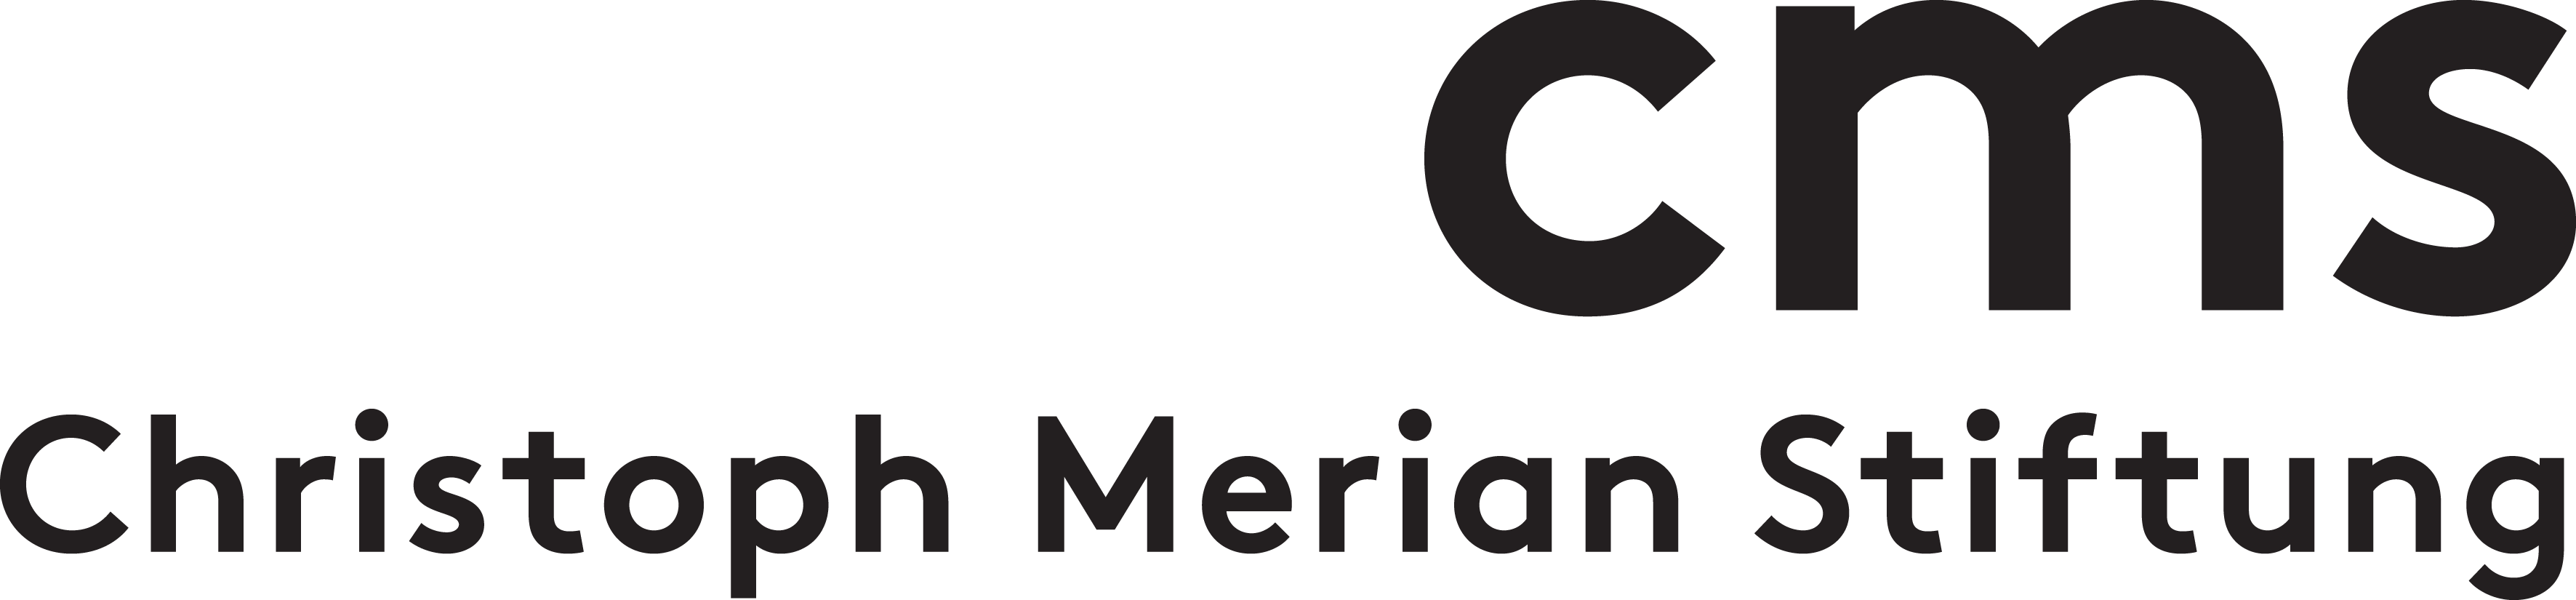 Christoph Merian Stiftung (CMS)